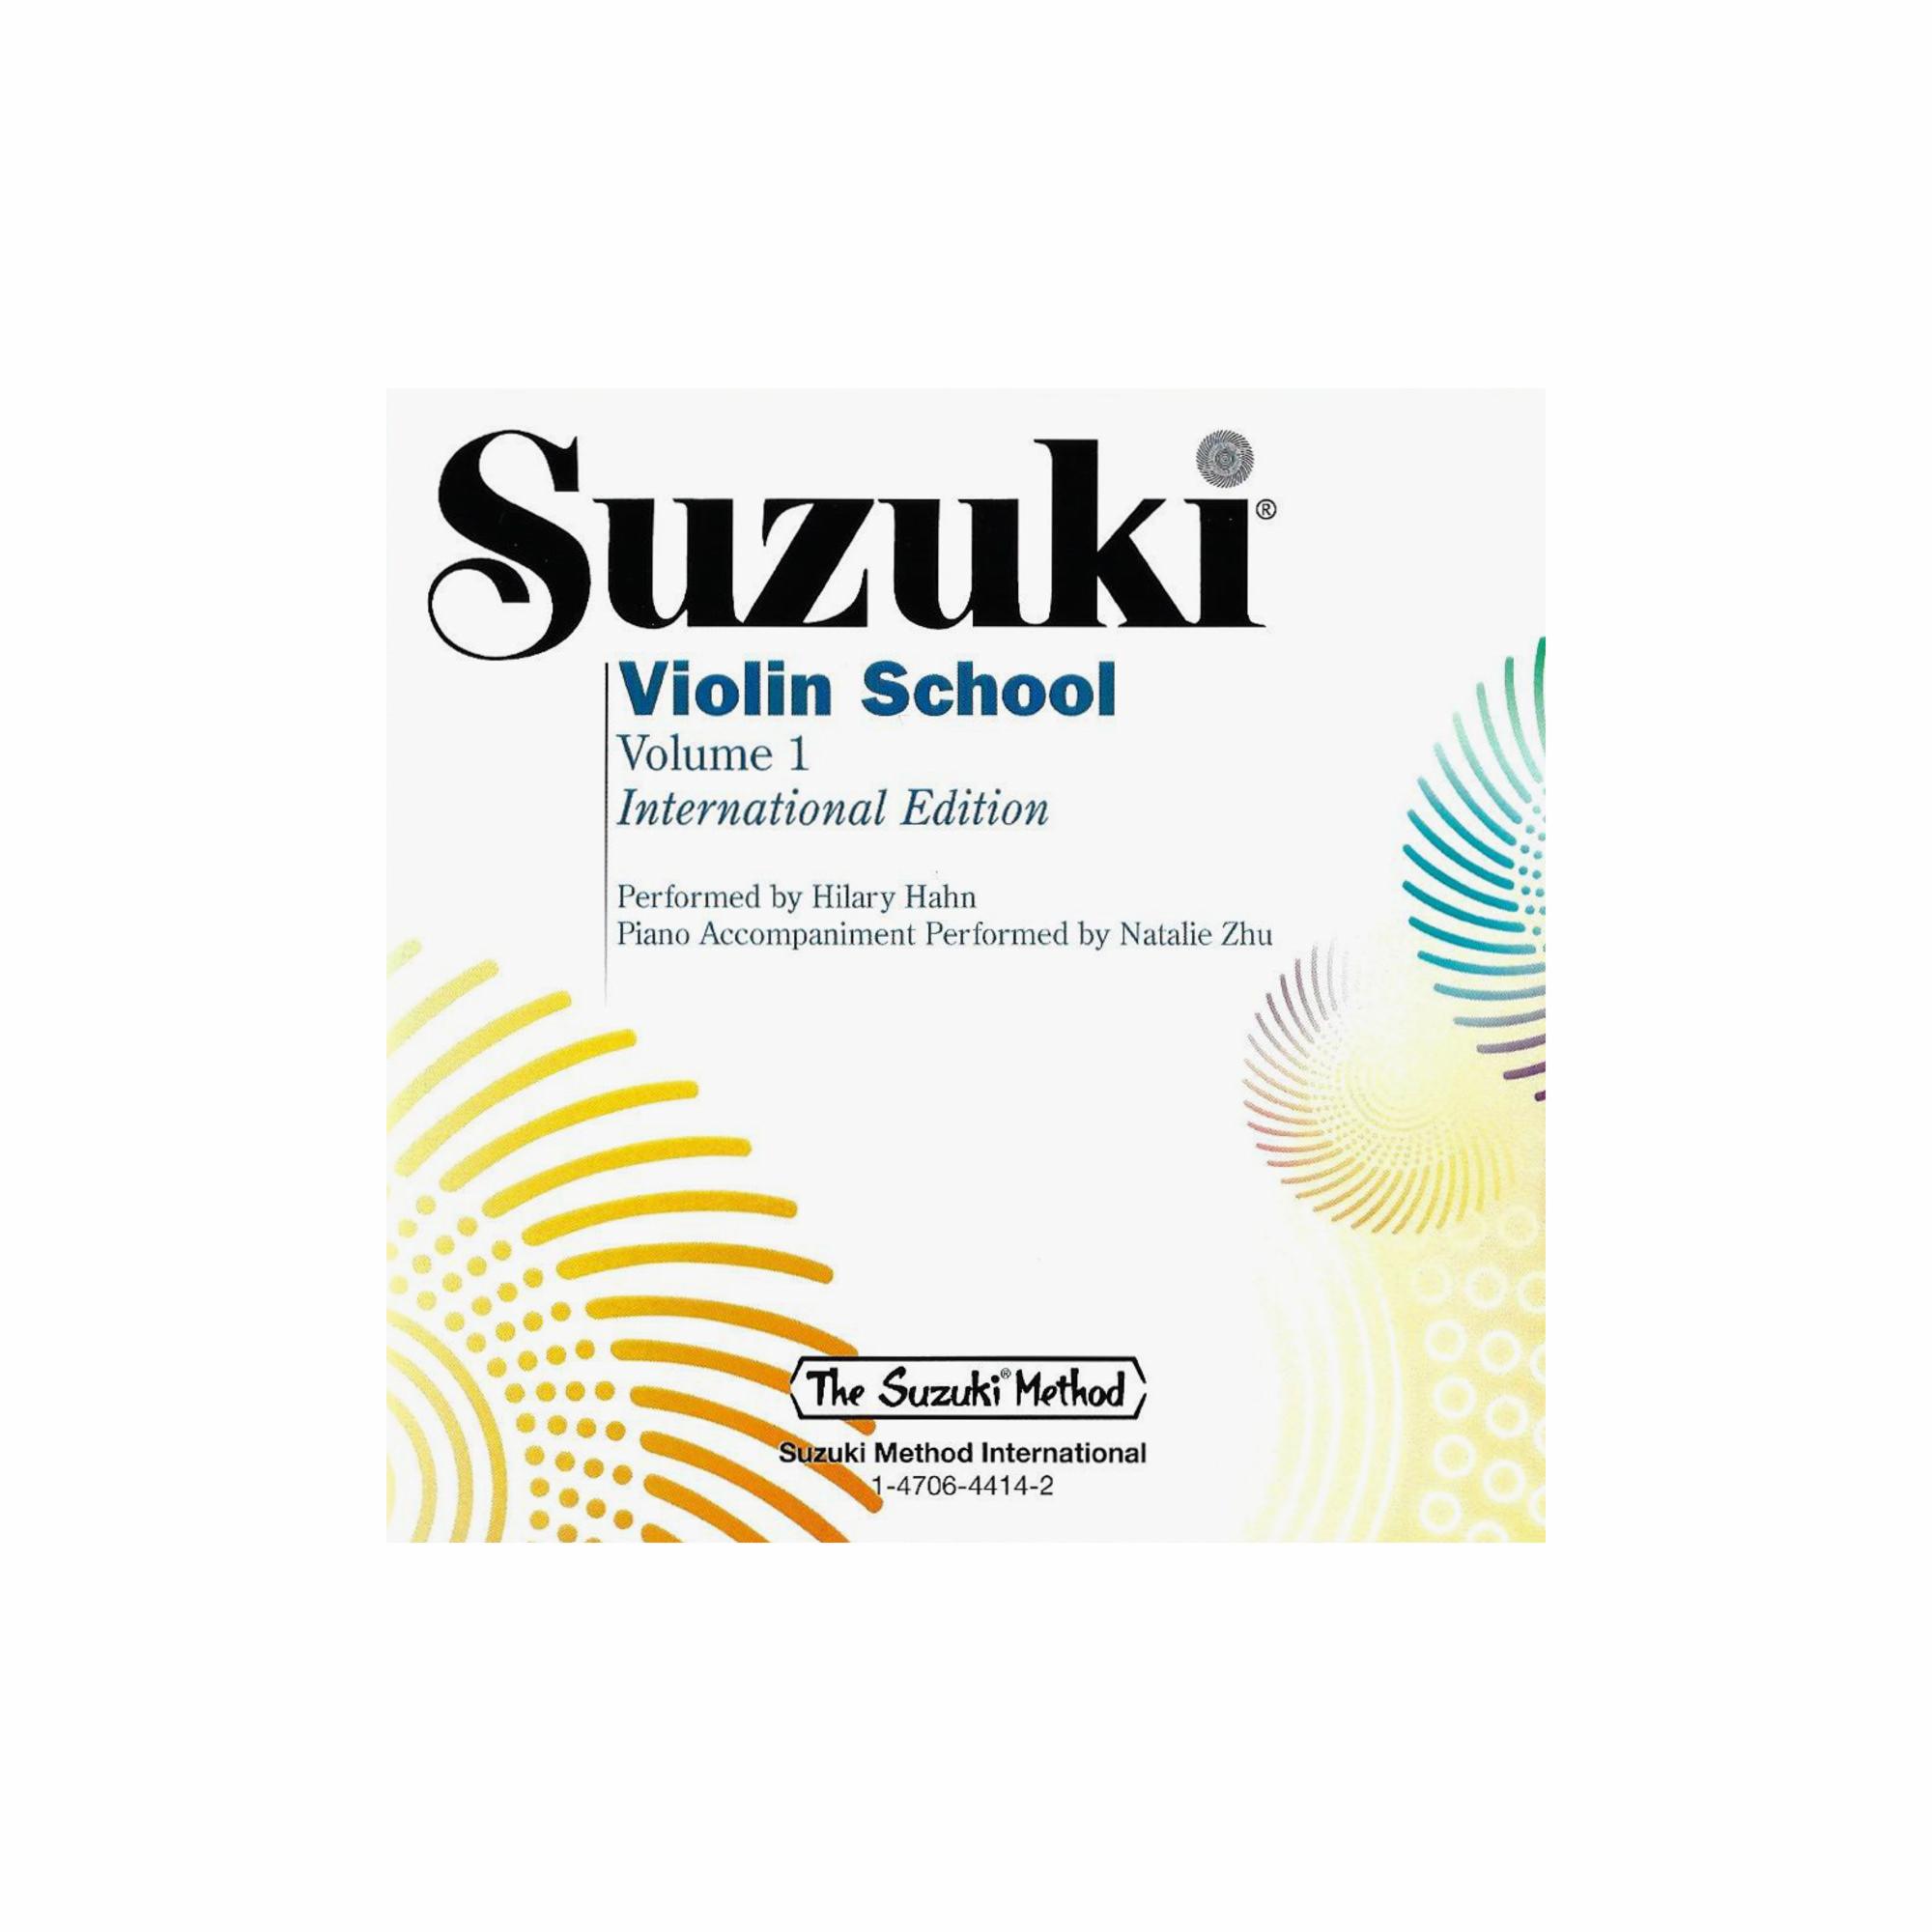 Suzuki Violin School: CD's